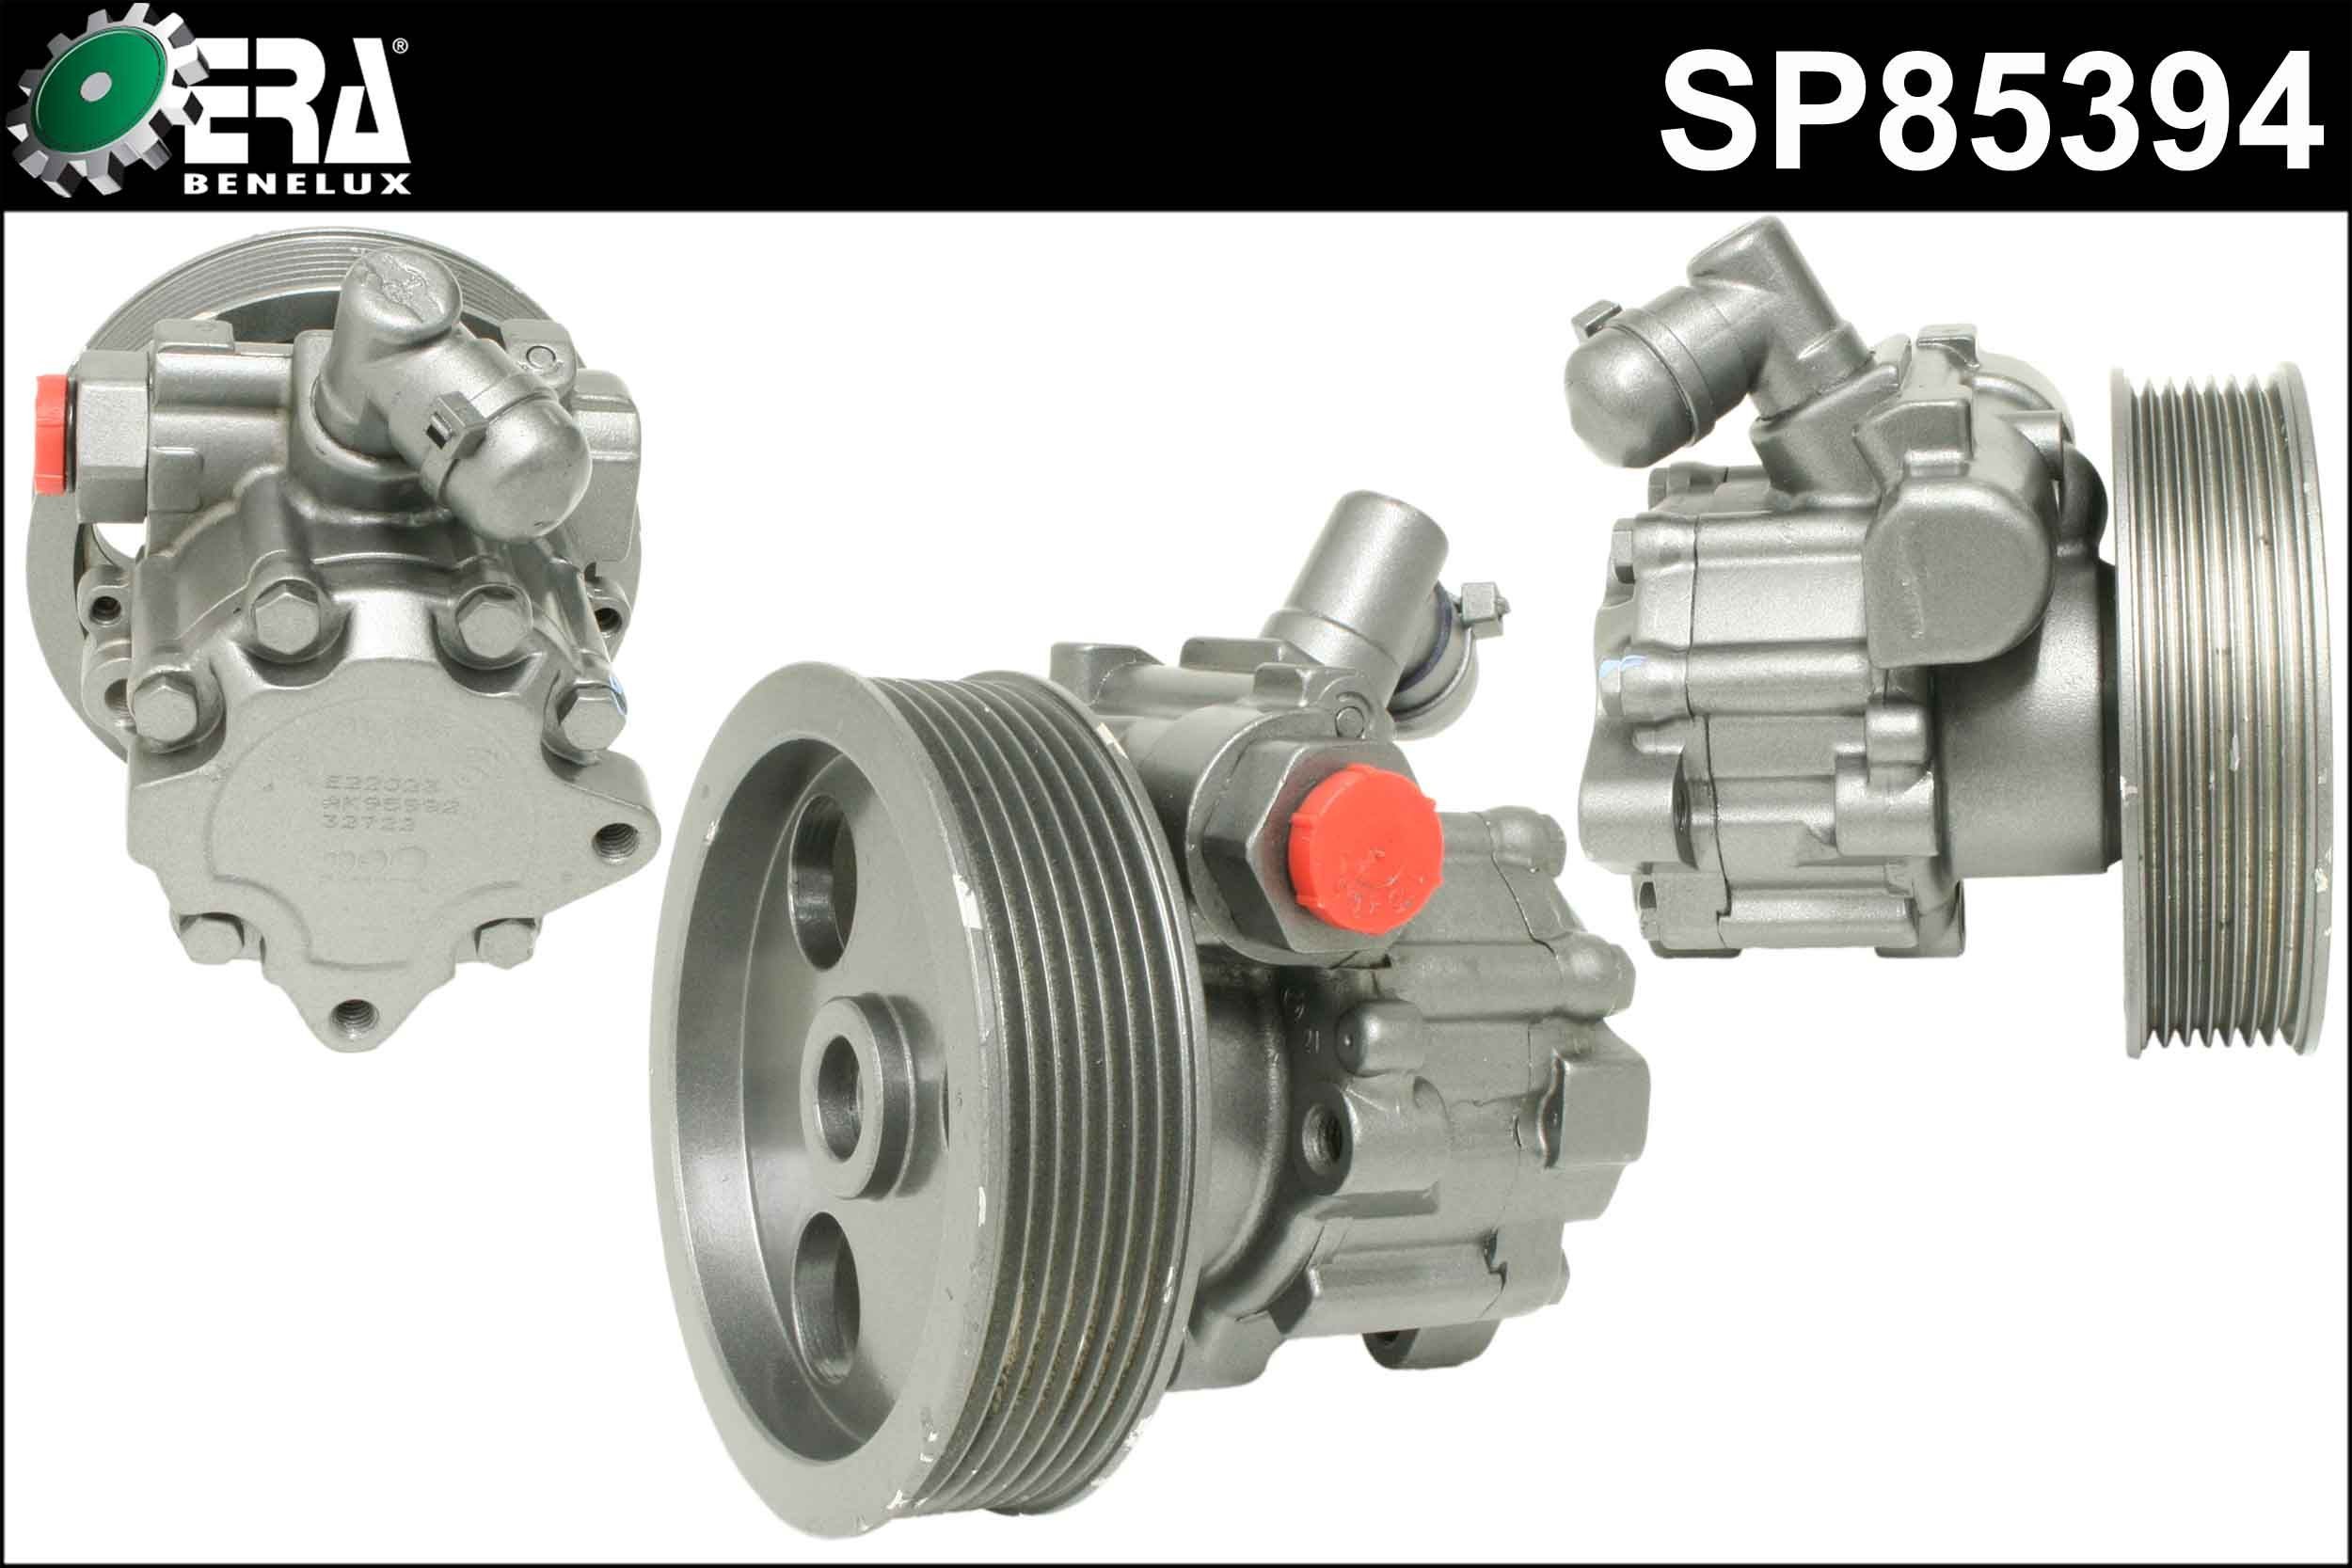 ERA Benelux SP85394 Power steering pump A00 546 60 301